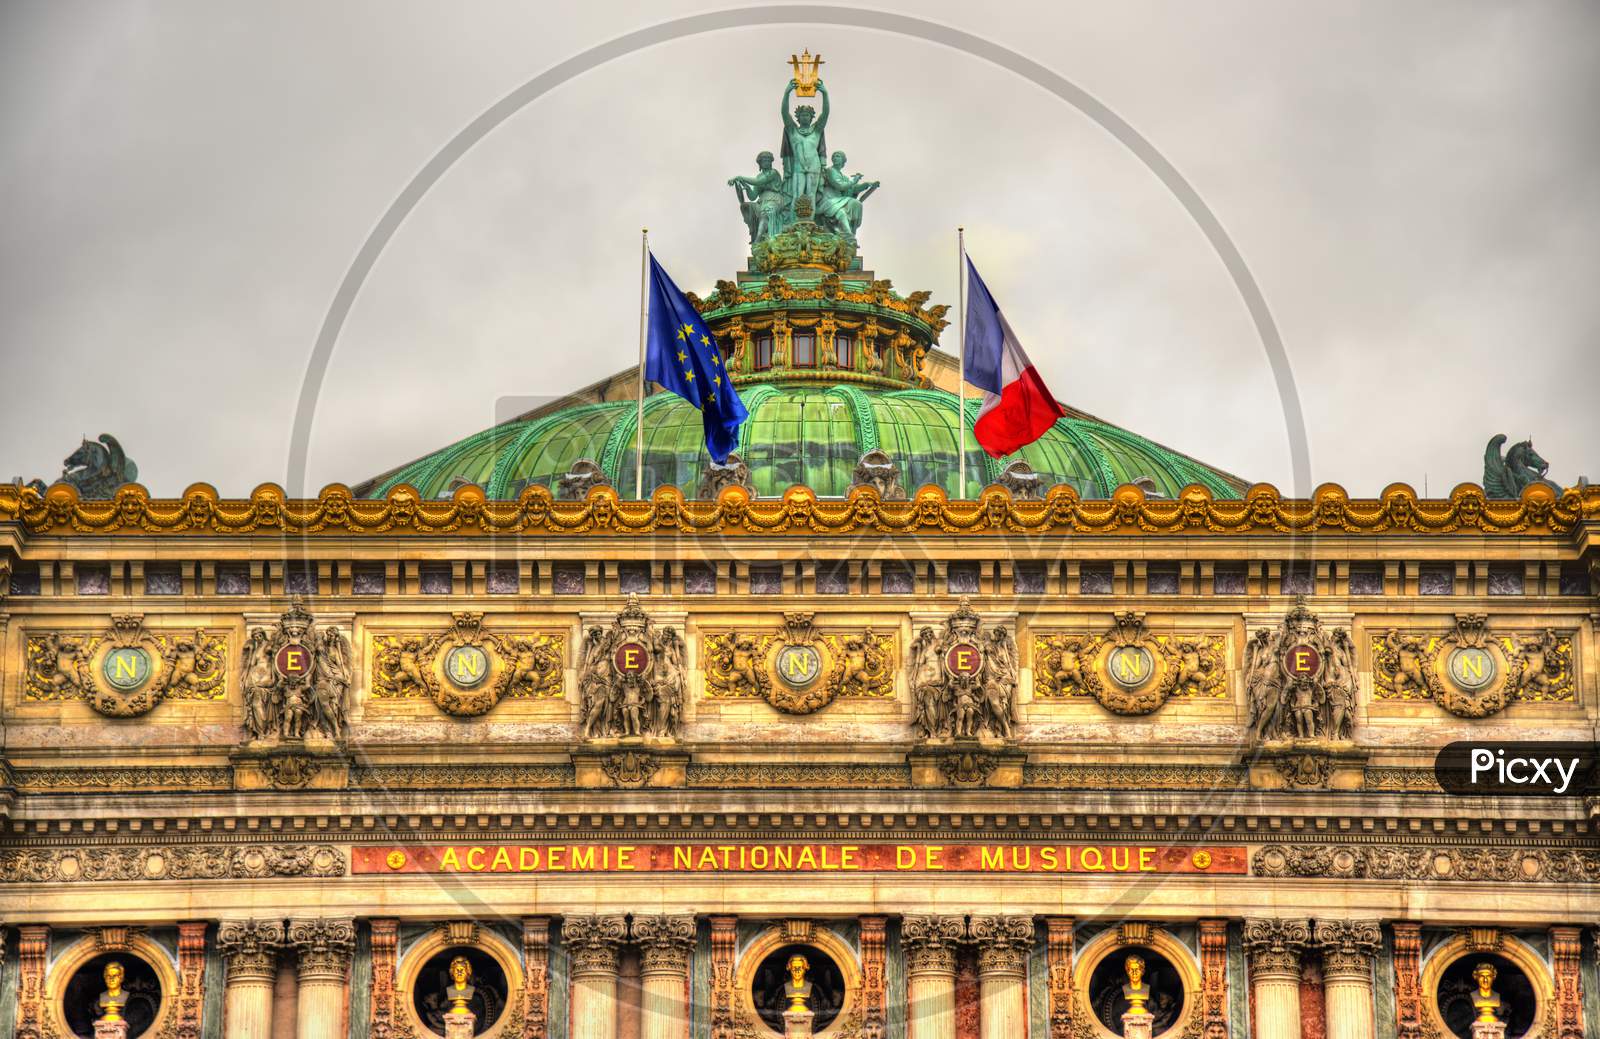 Palais Garnier, A Famous Opera House In Paris, France